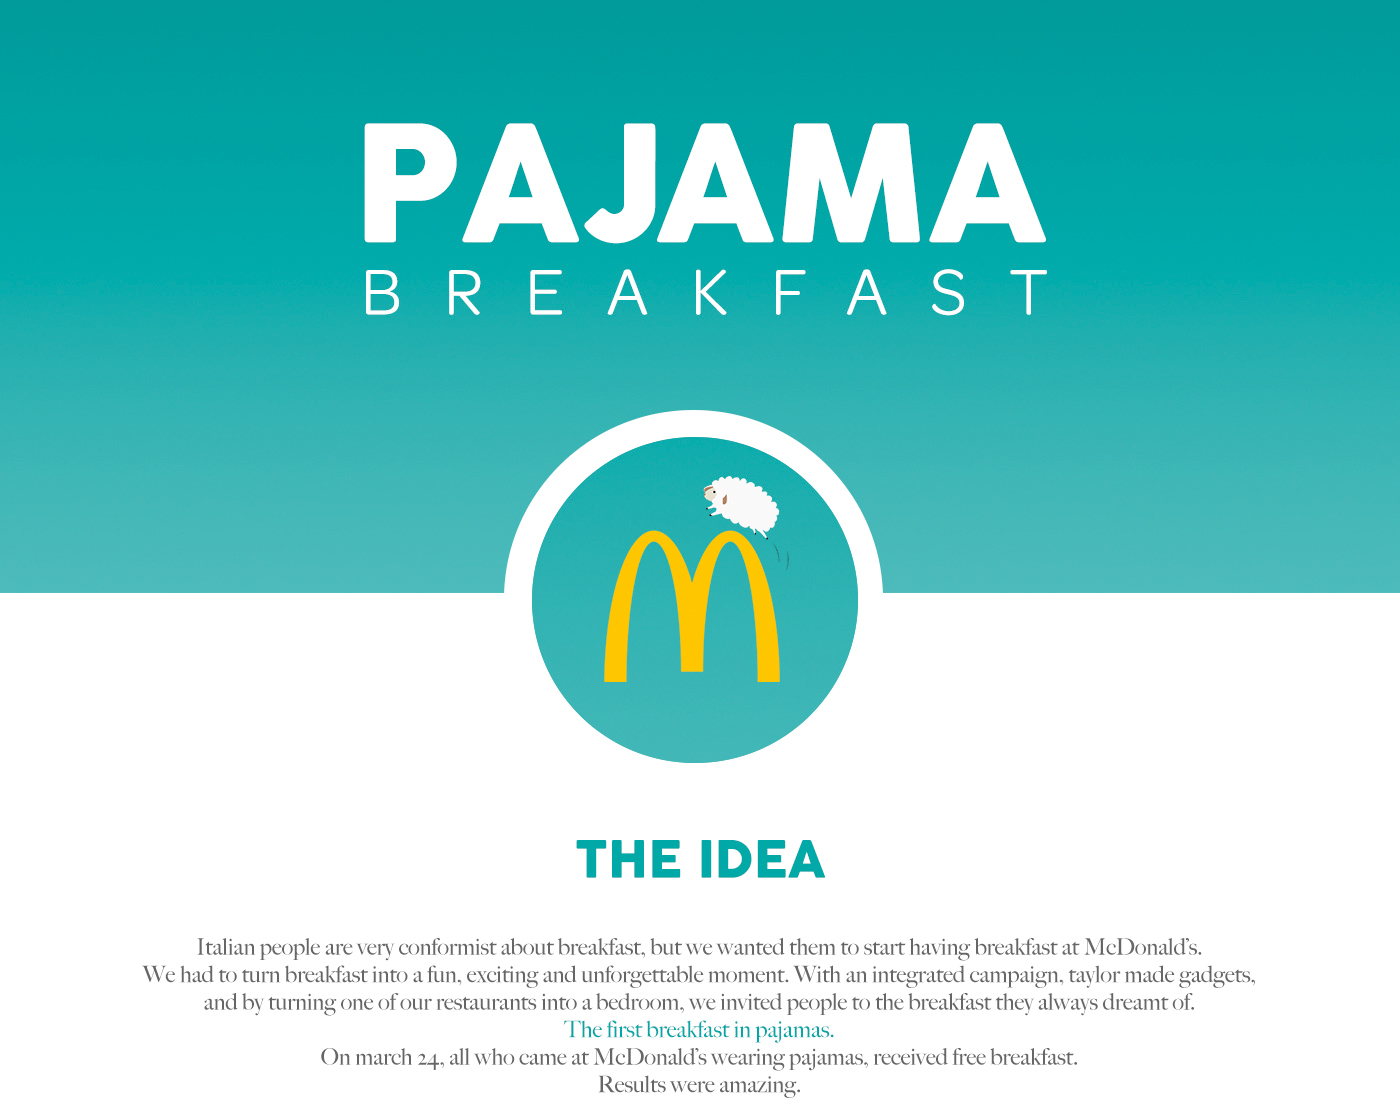 mcdonald's Event restaurant imlovinit24 Pajama breakfast colazione pigiama Evento